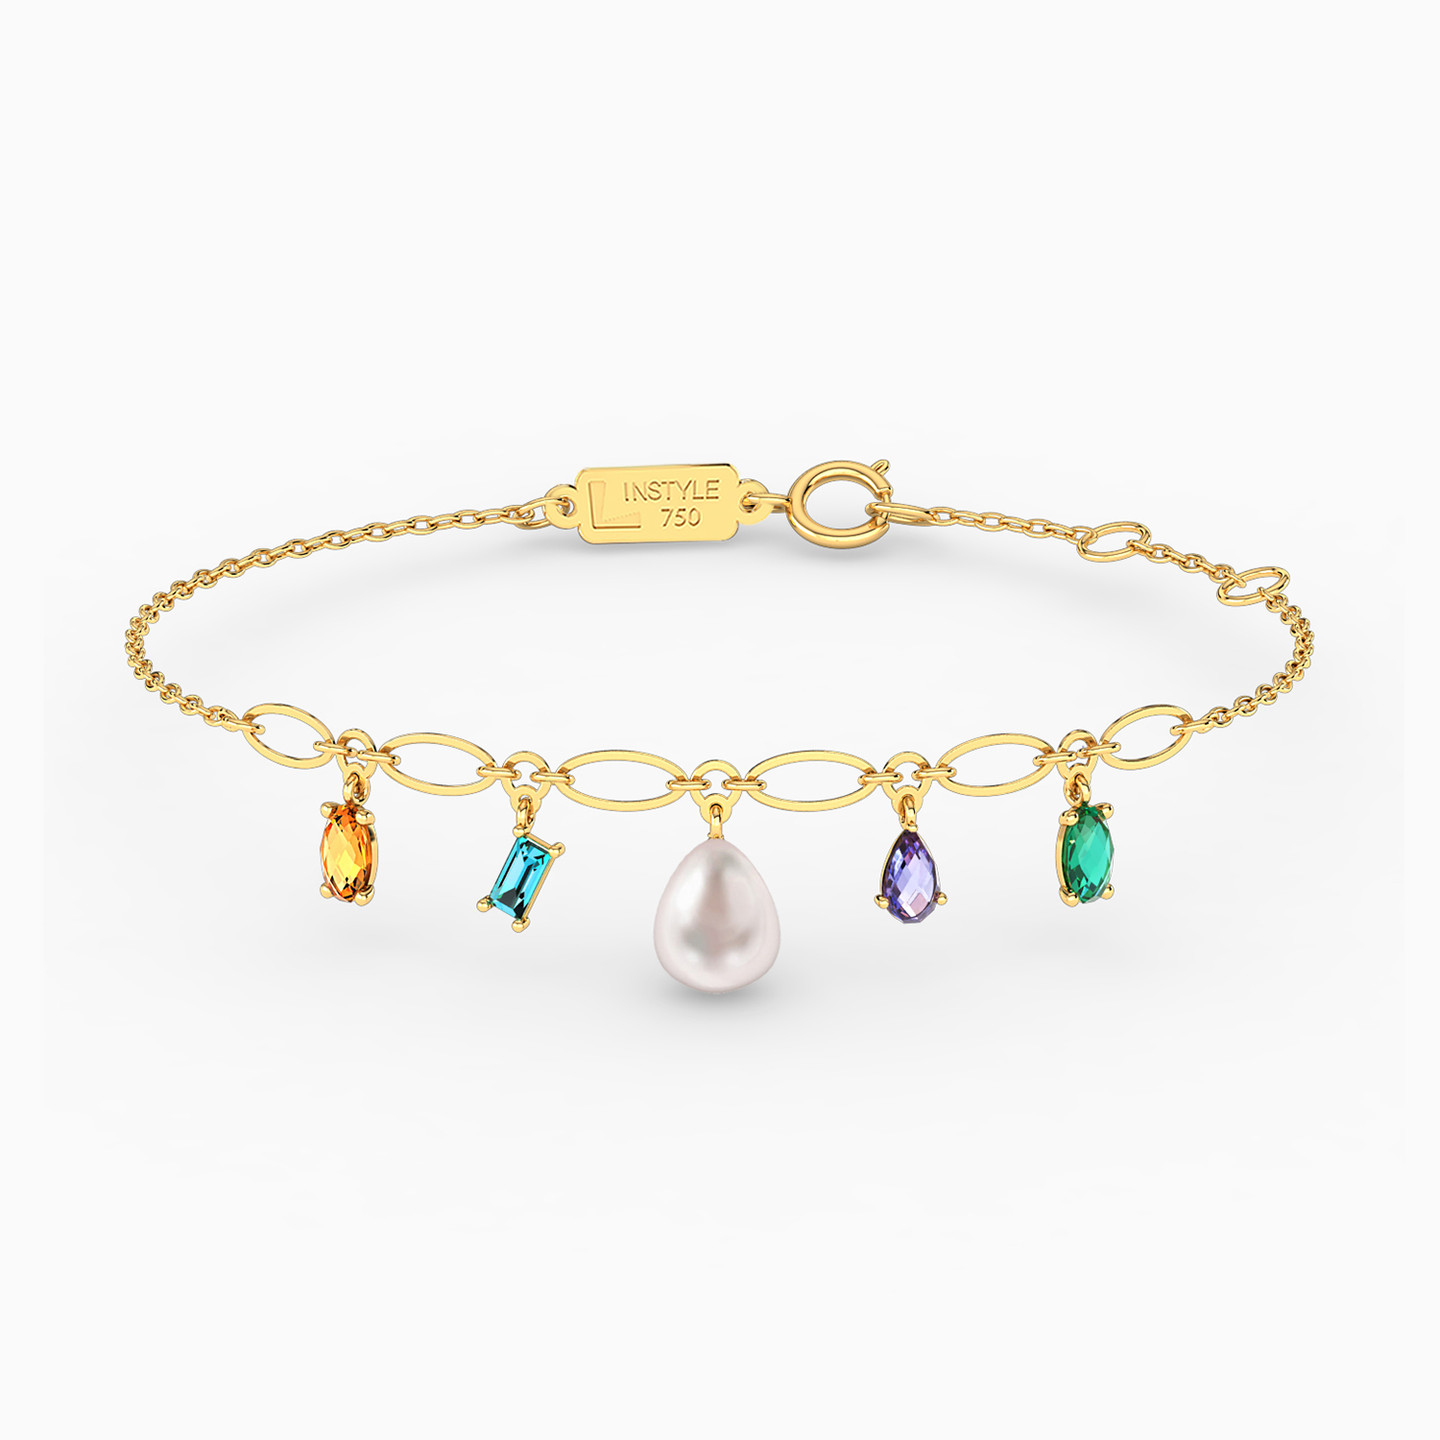 18K Gold Pearls & Colored Stones Charm Bracelet